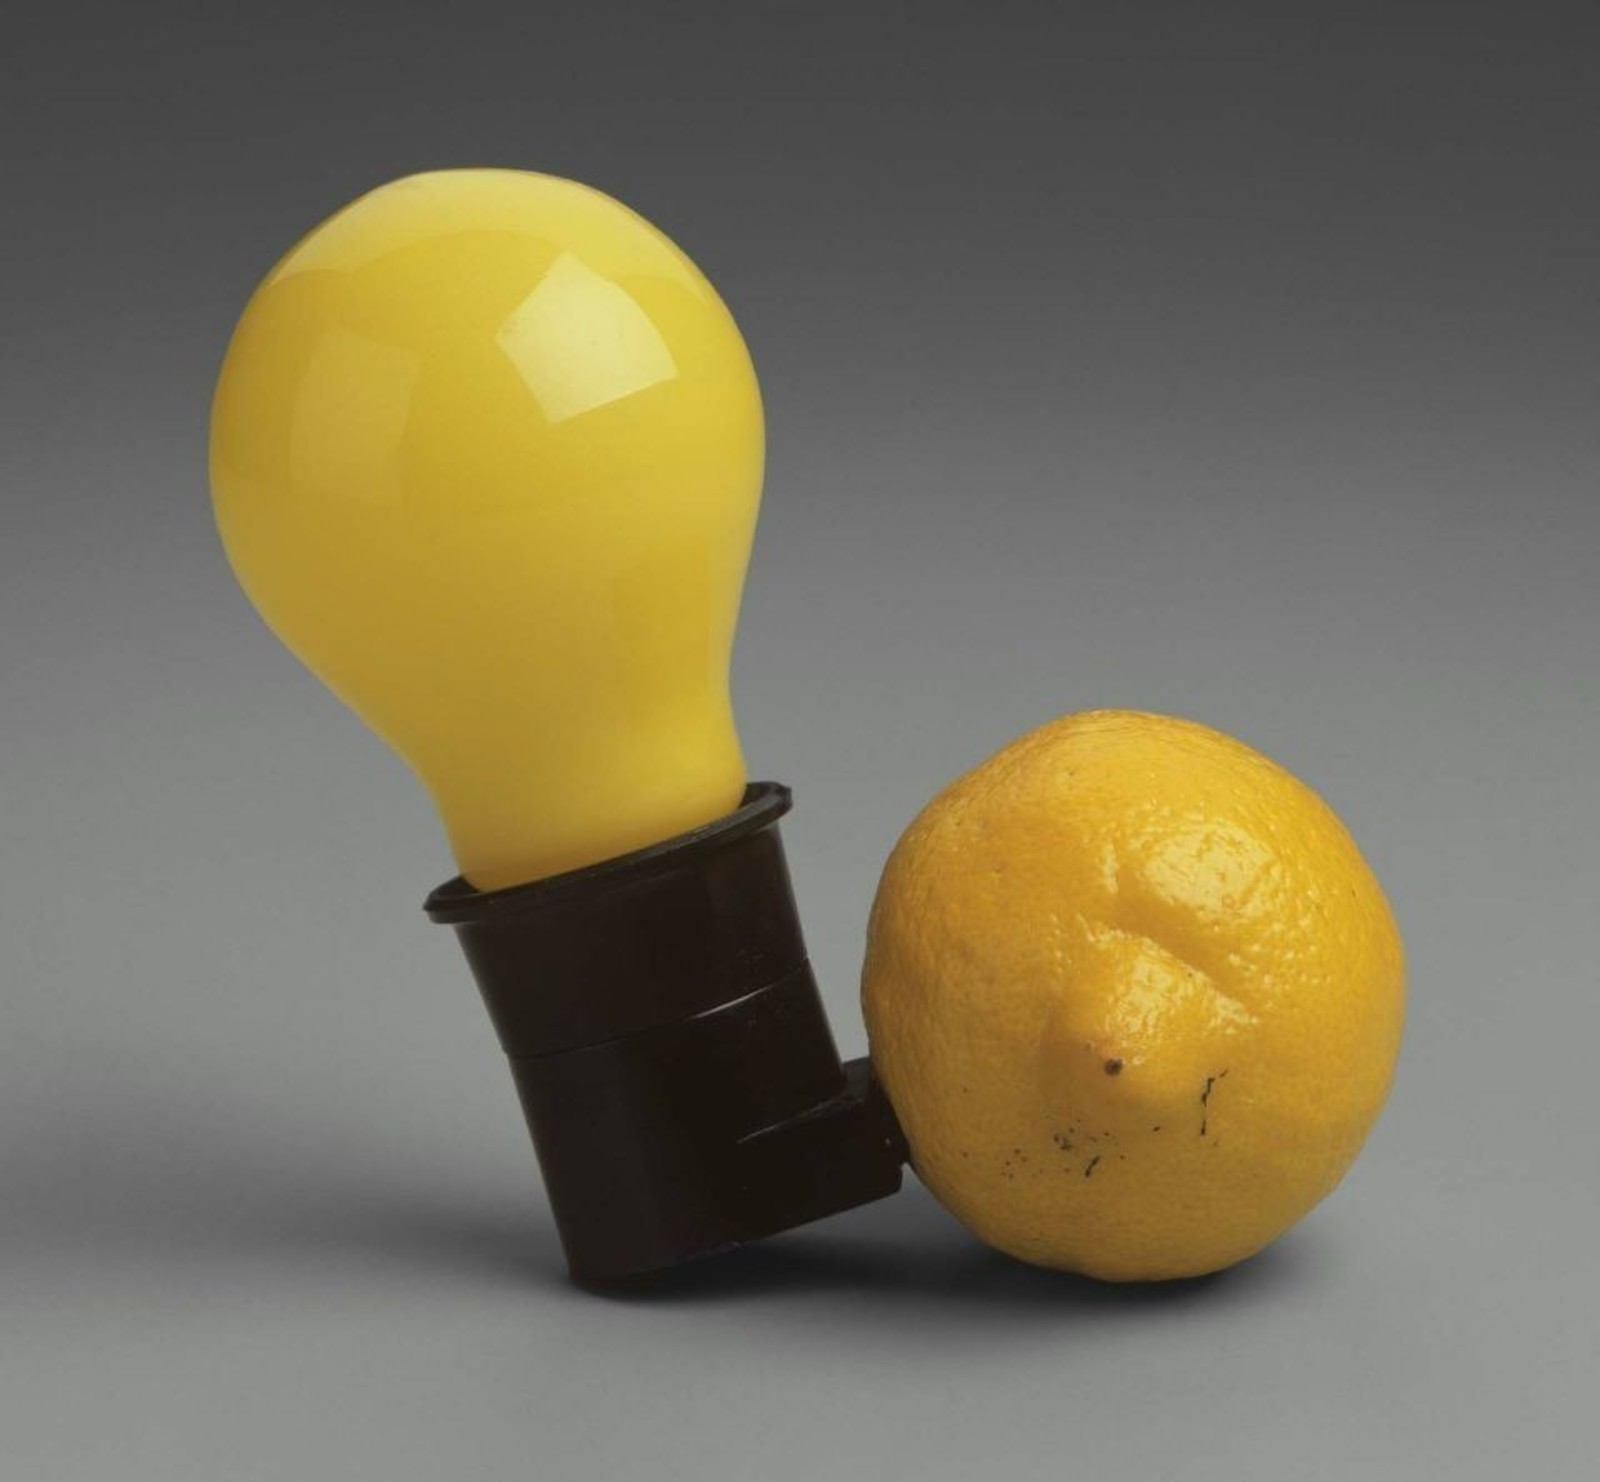 Joseph Beuys. Capri-Batterie. 1985. Lemon, lightbulb with plug socket. 8 x 11 x 6 cm. National Galleries of Scotland, Edinburgh, Great Britain